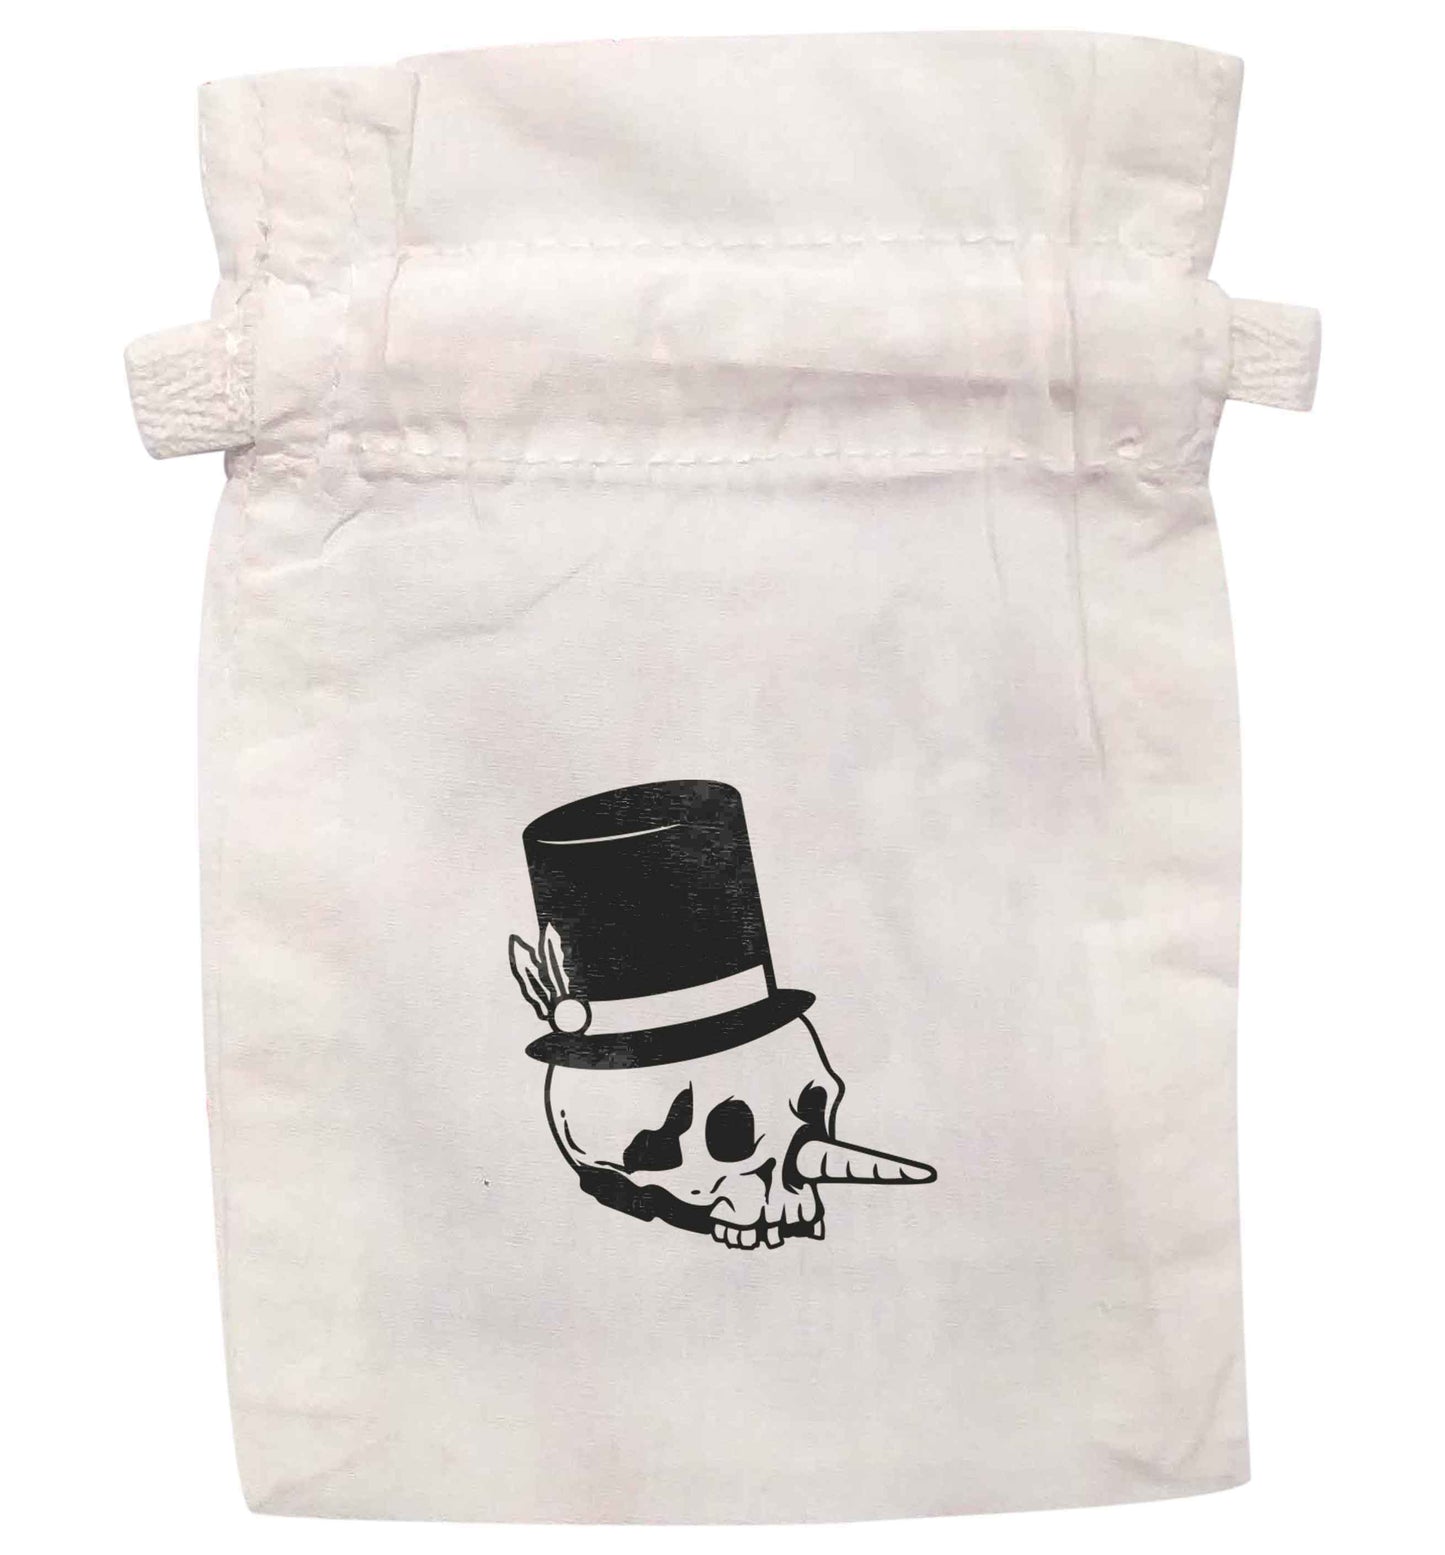 Snowman punk | XS - L | Pouch / Drawstring bag / Sack | Organic Cotton | Bulk discounts available!